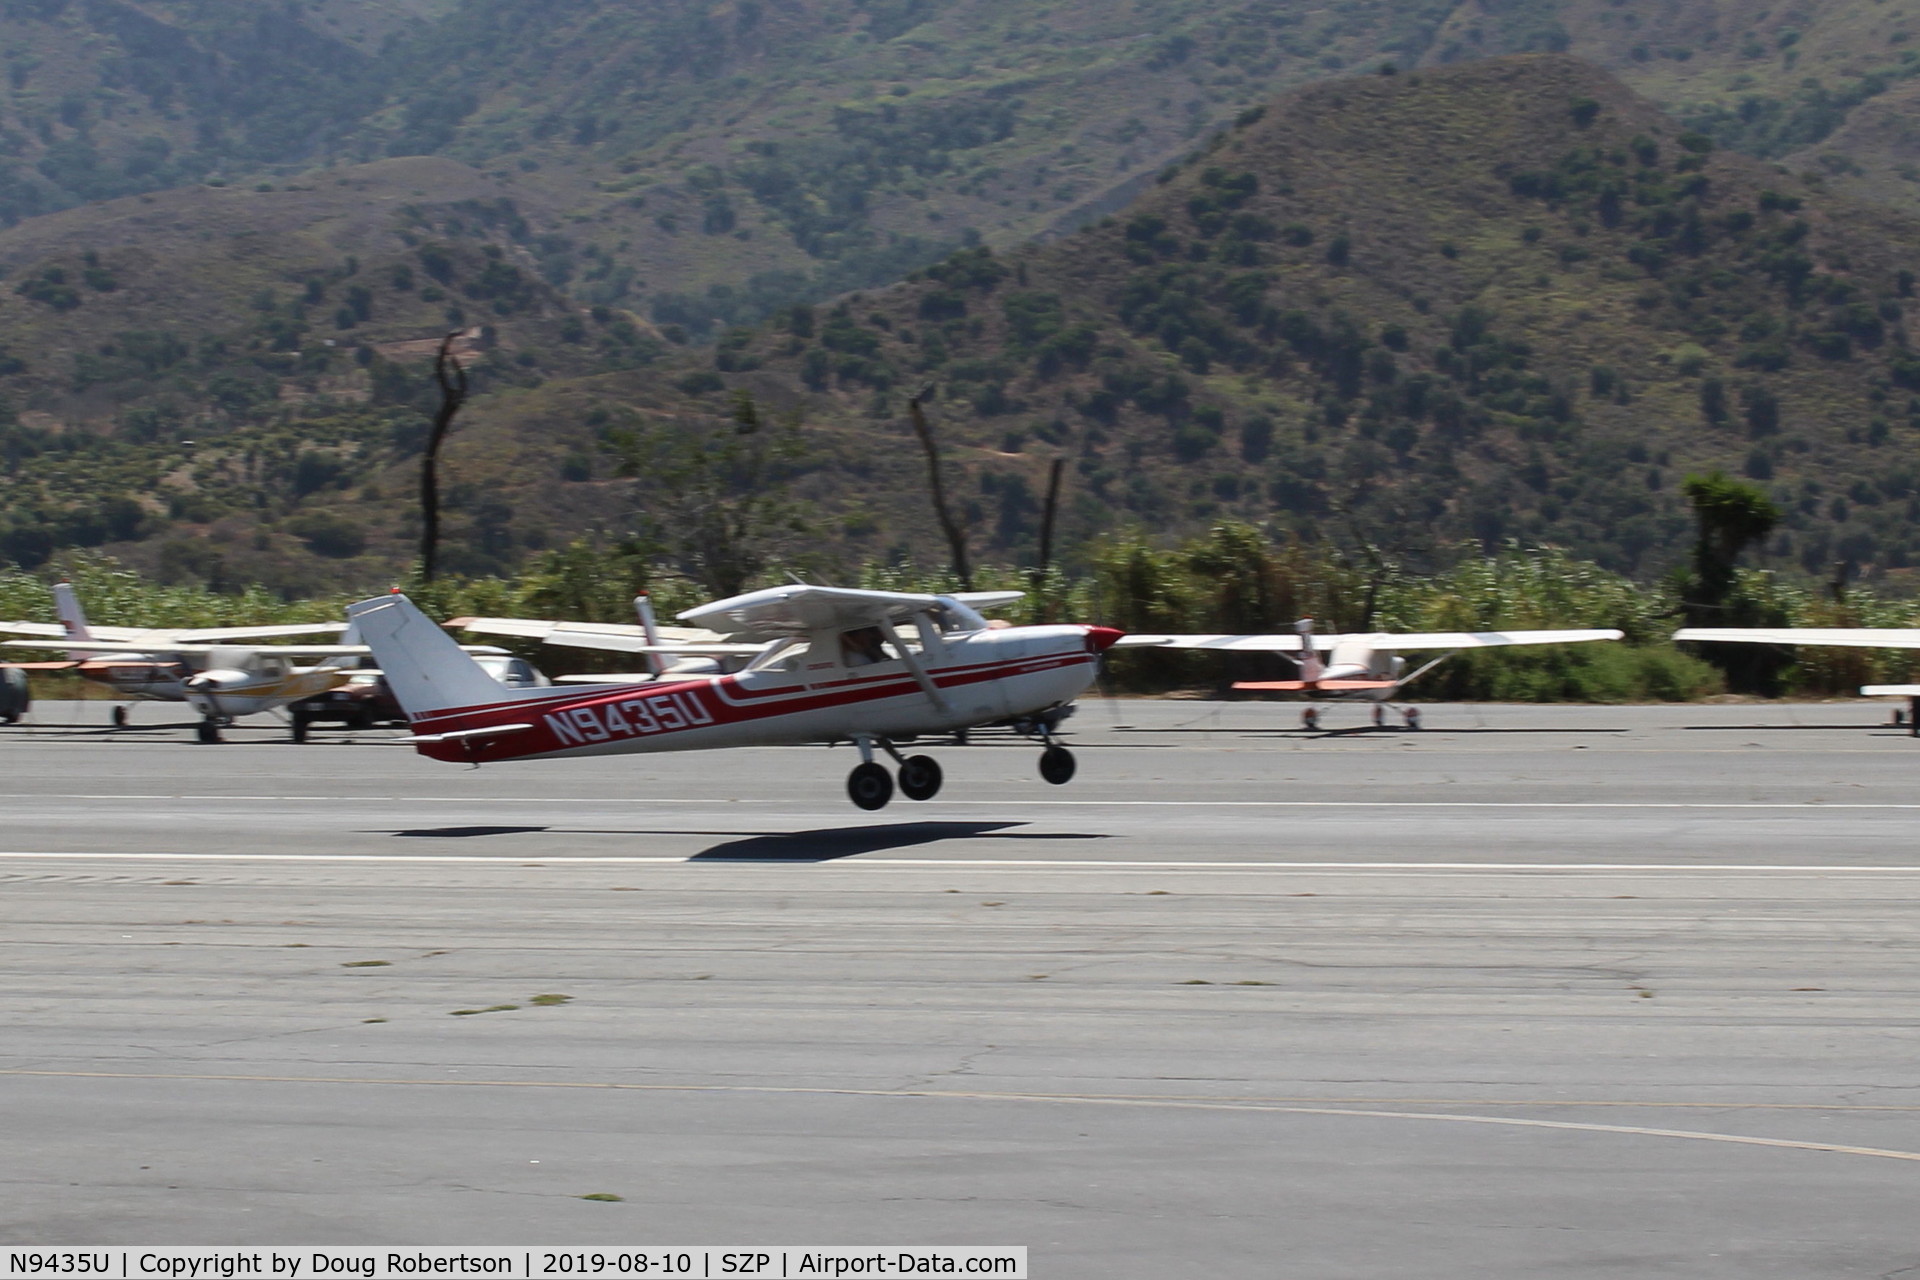 N9435U, 1976 Cessna 150M C/N 15078383, 1976 Cessna 150M, Continental O-200 100 Hp, liftoff Rwy 22